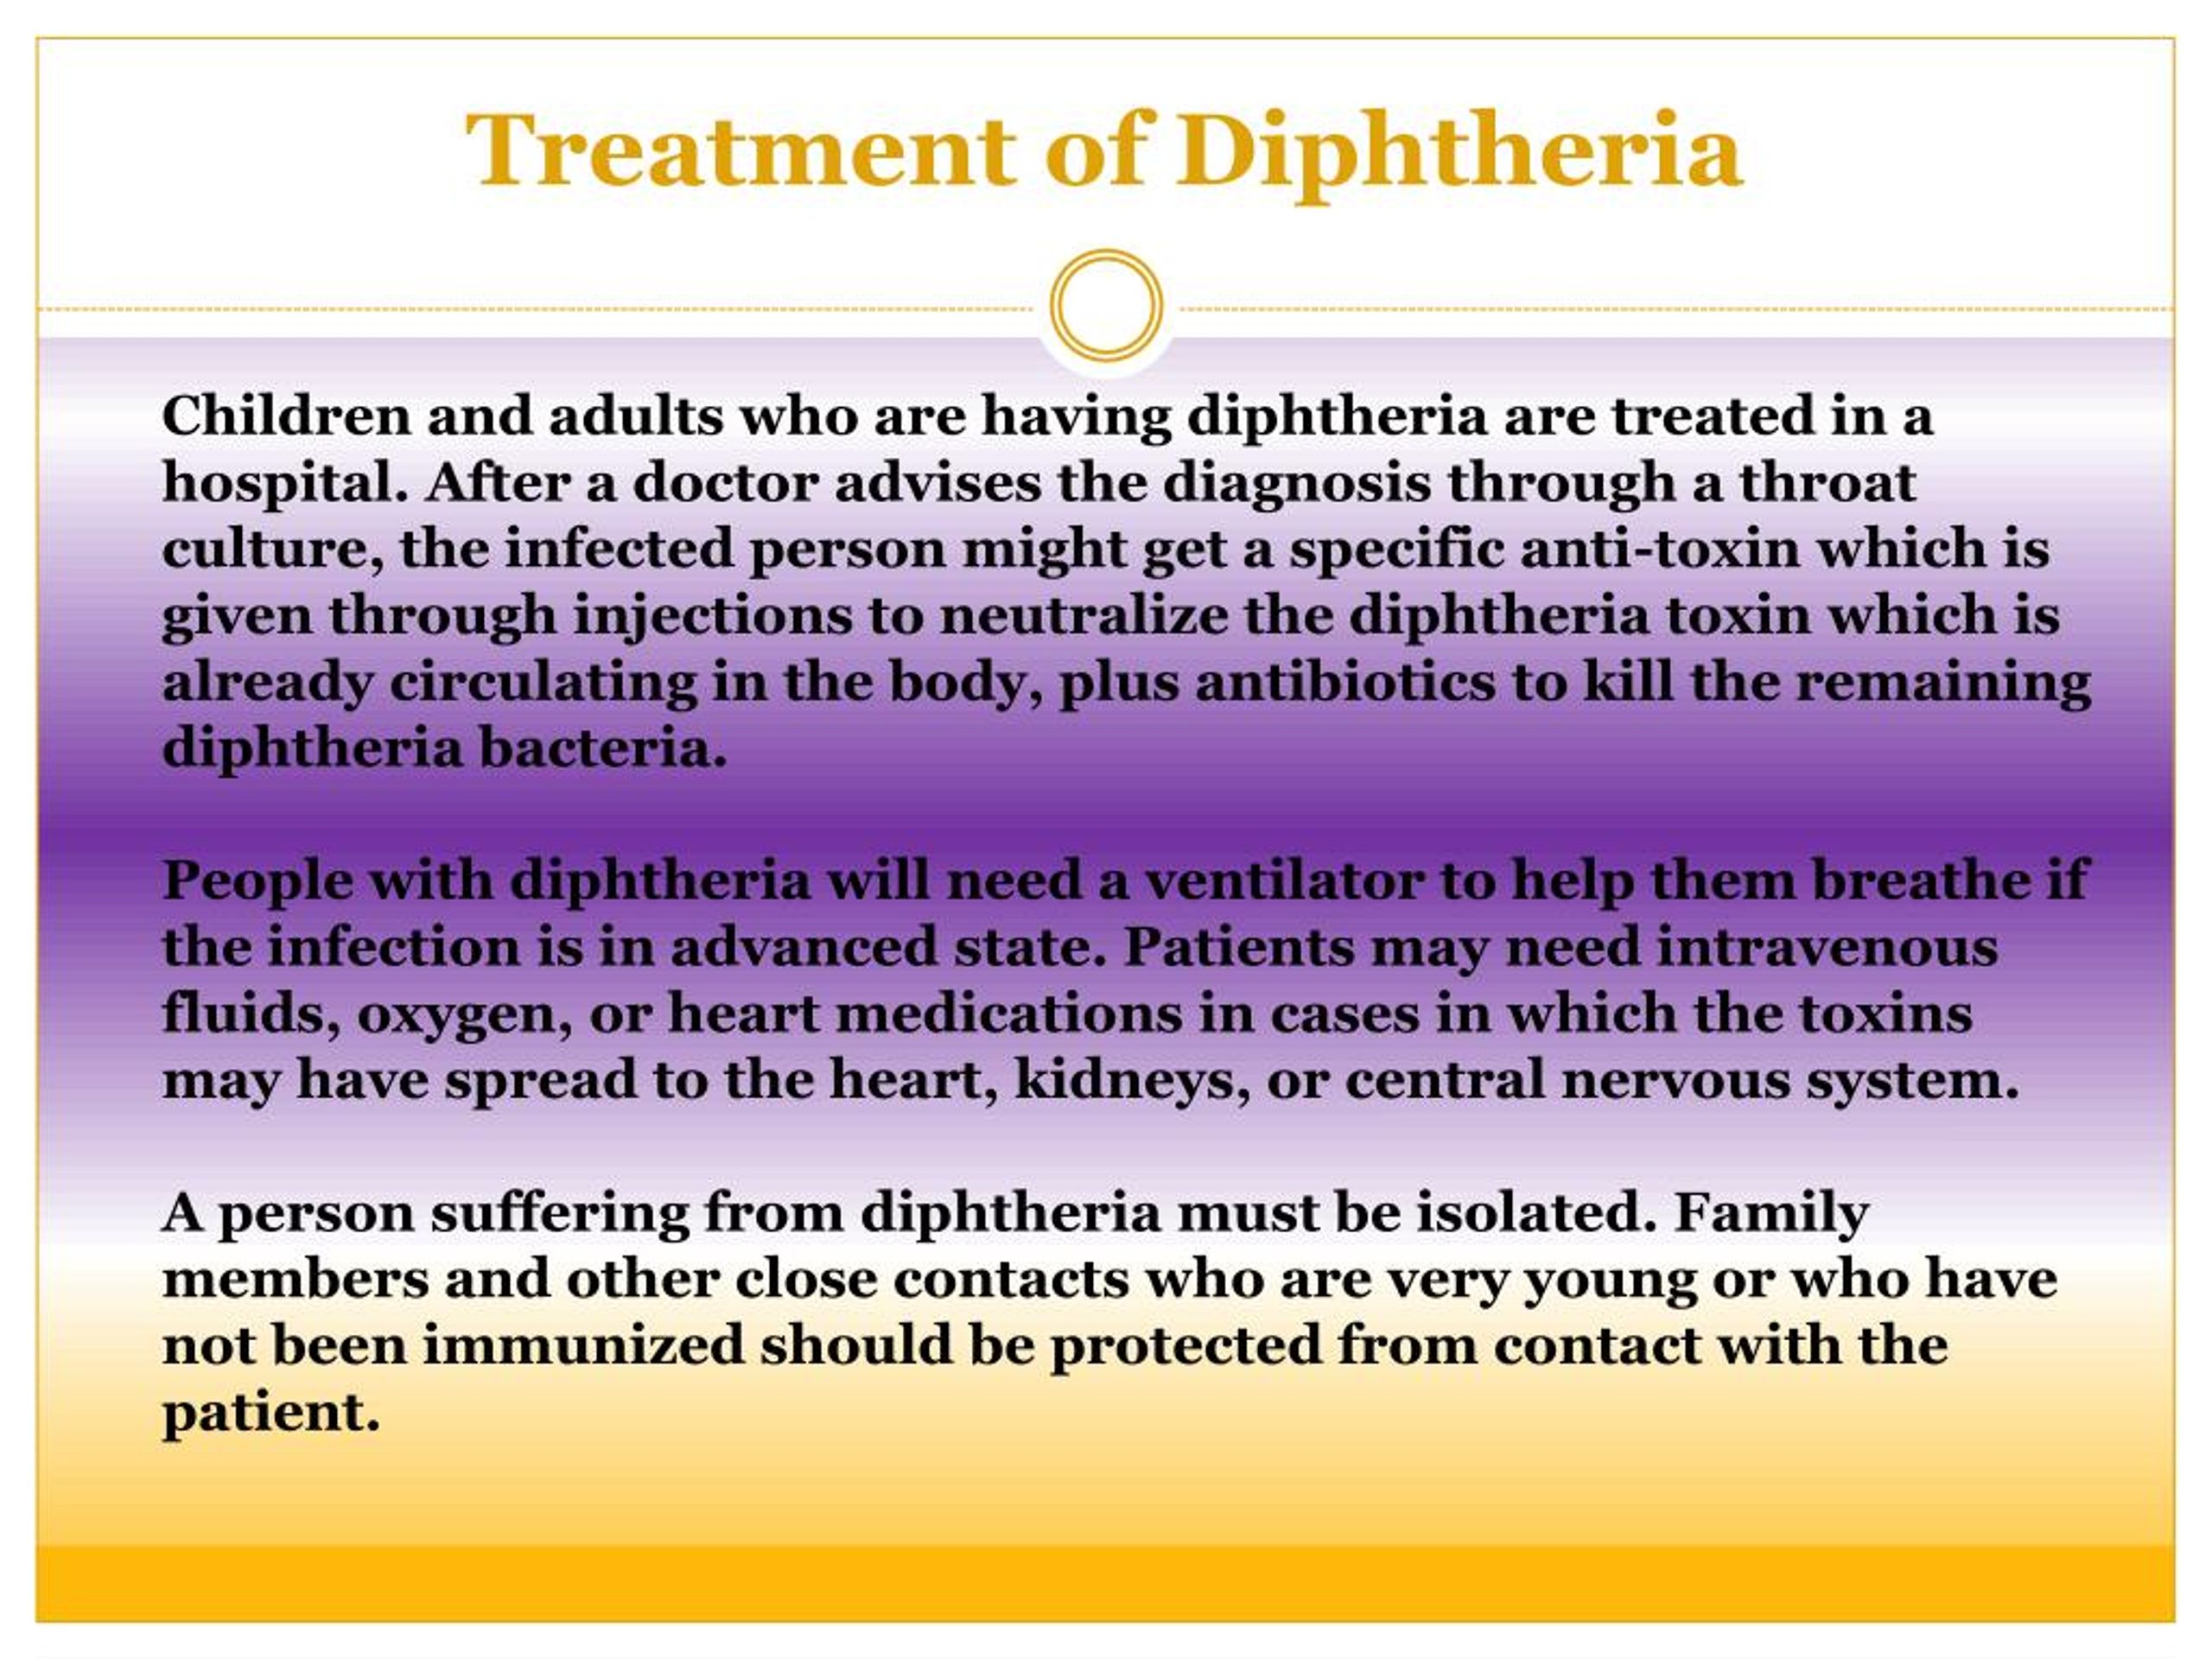 diphtheria antibiotics